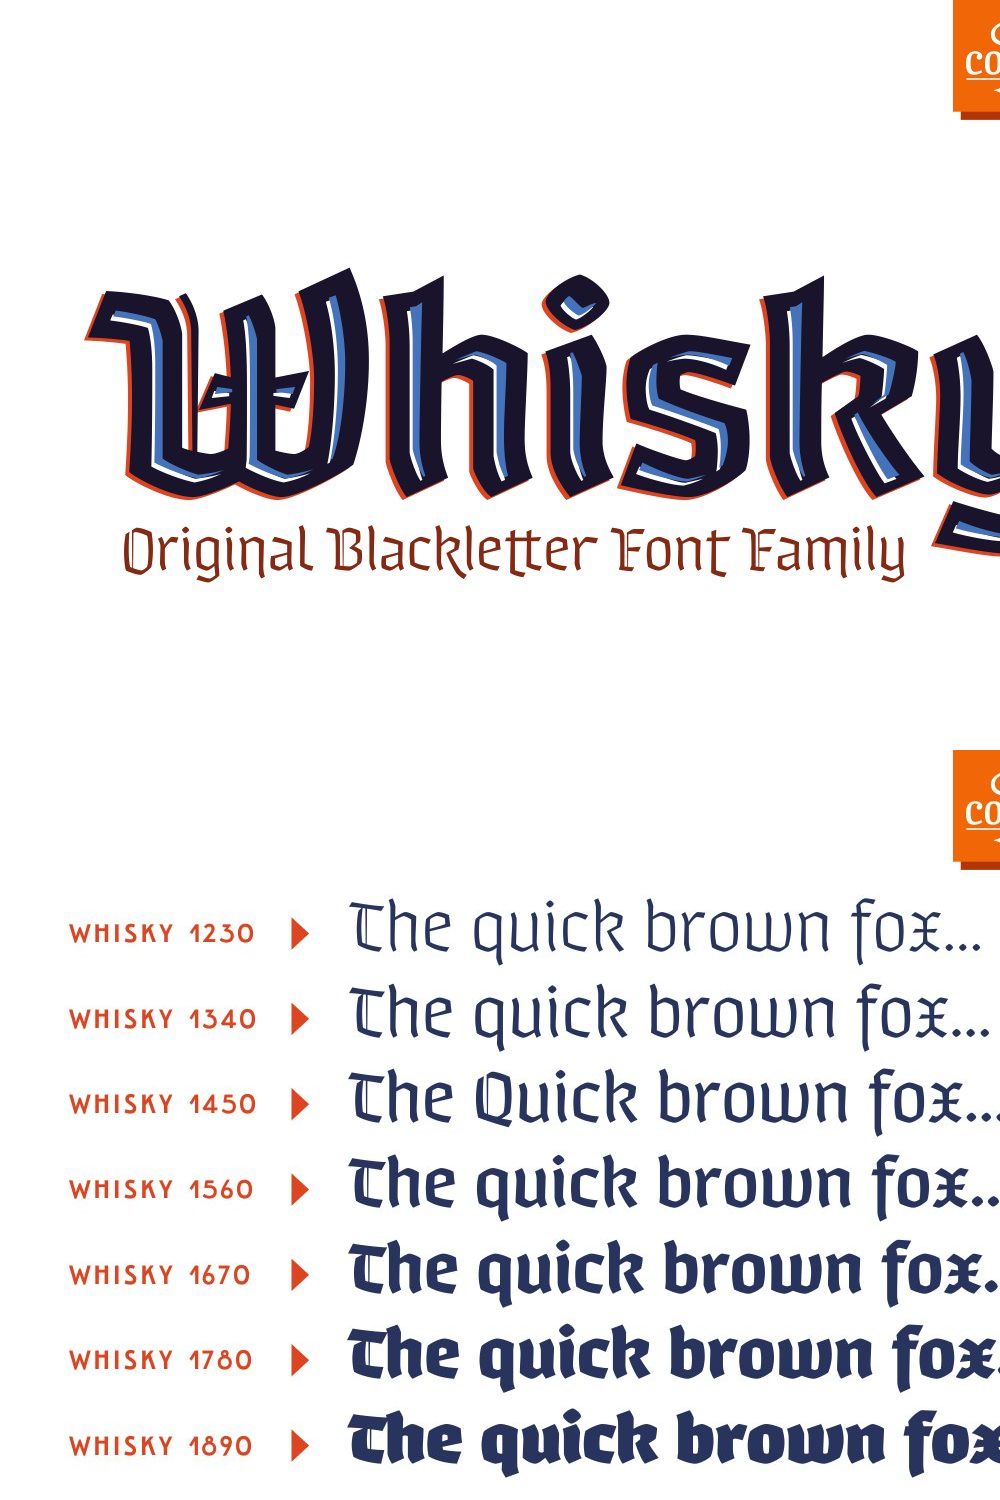 Whisky - A modern blackletter font pinterest preview image.